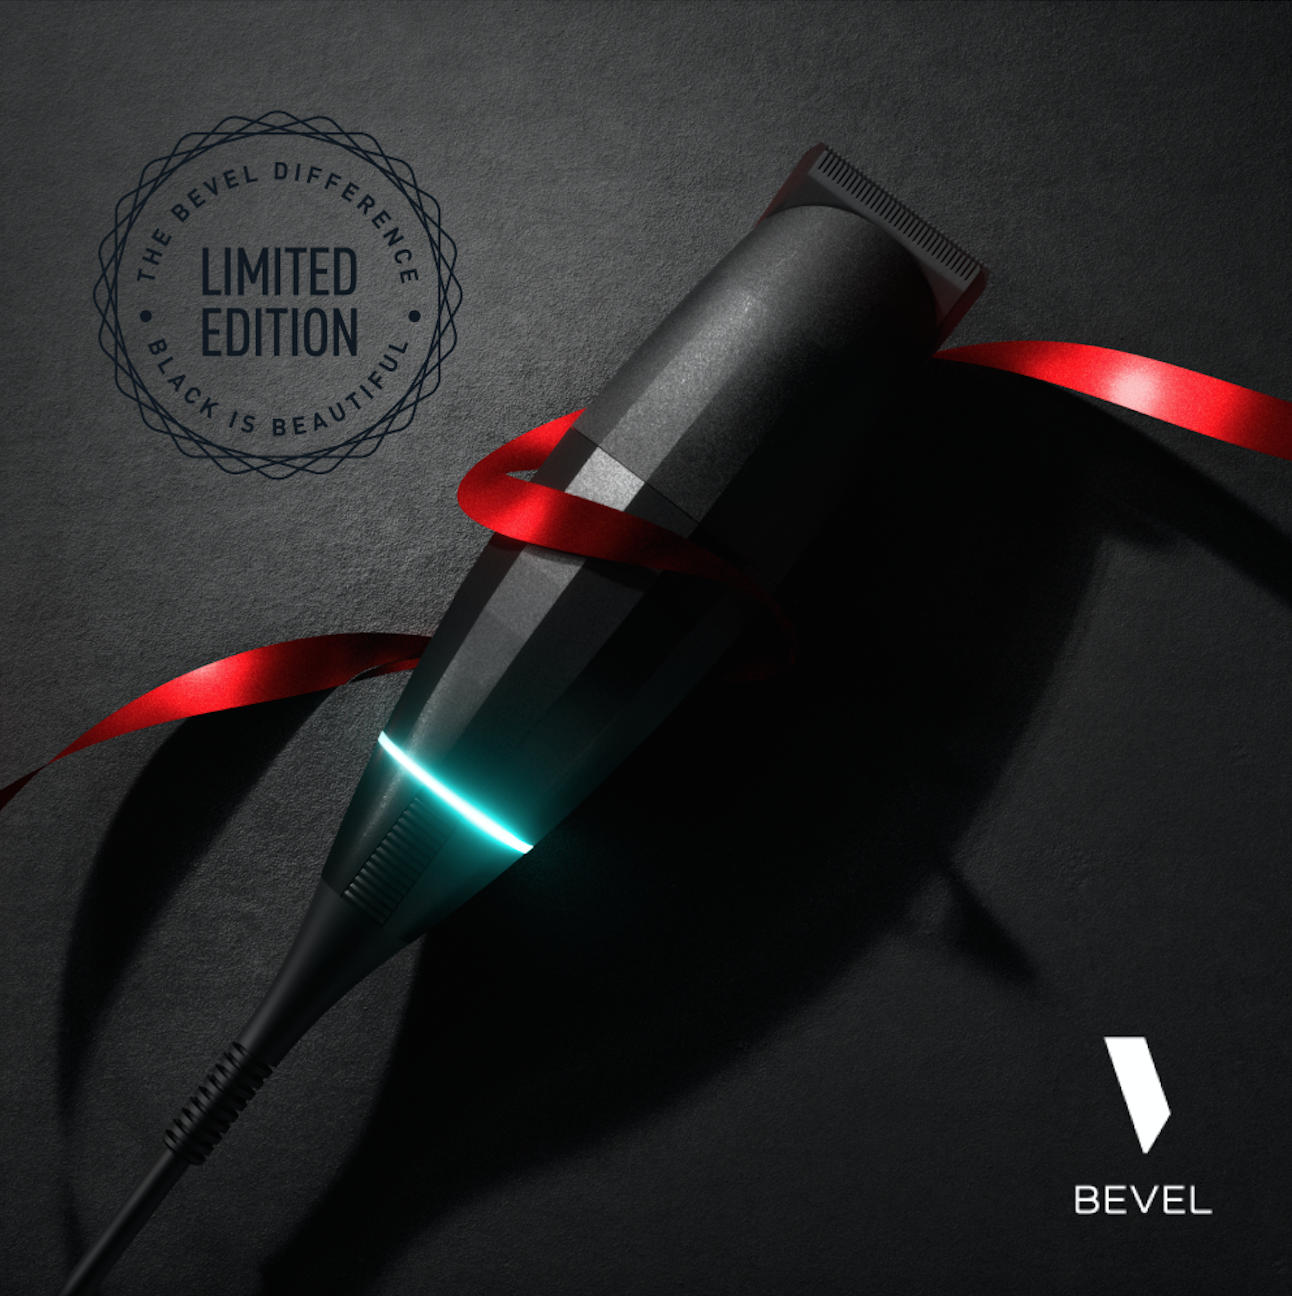 Bevel’s Limited Edition Black Trimmer